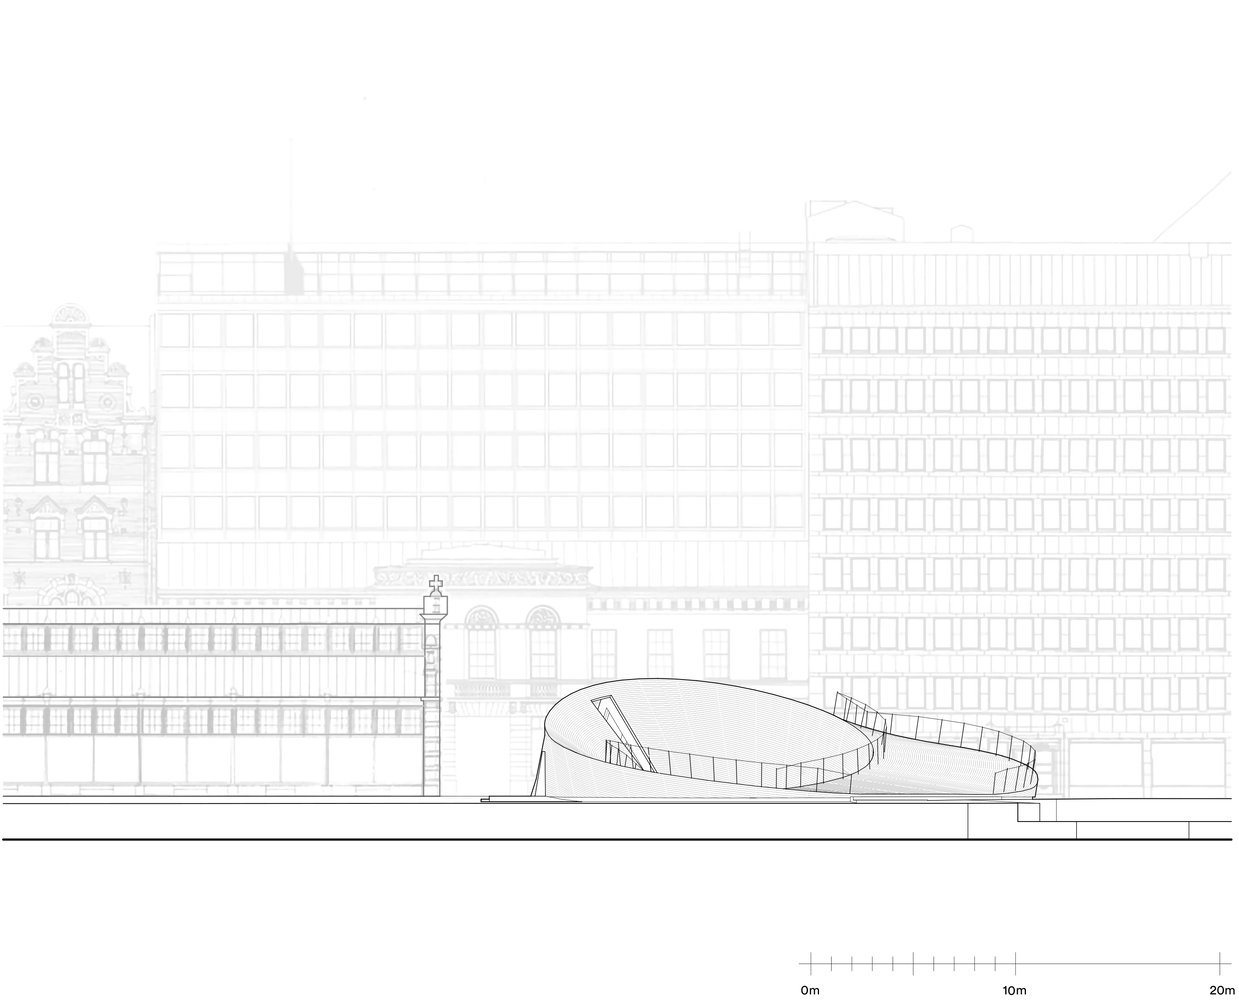 verstas-architects-helsinki-biennial-pavilion-east-elevation-300.jpg